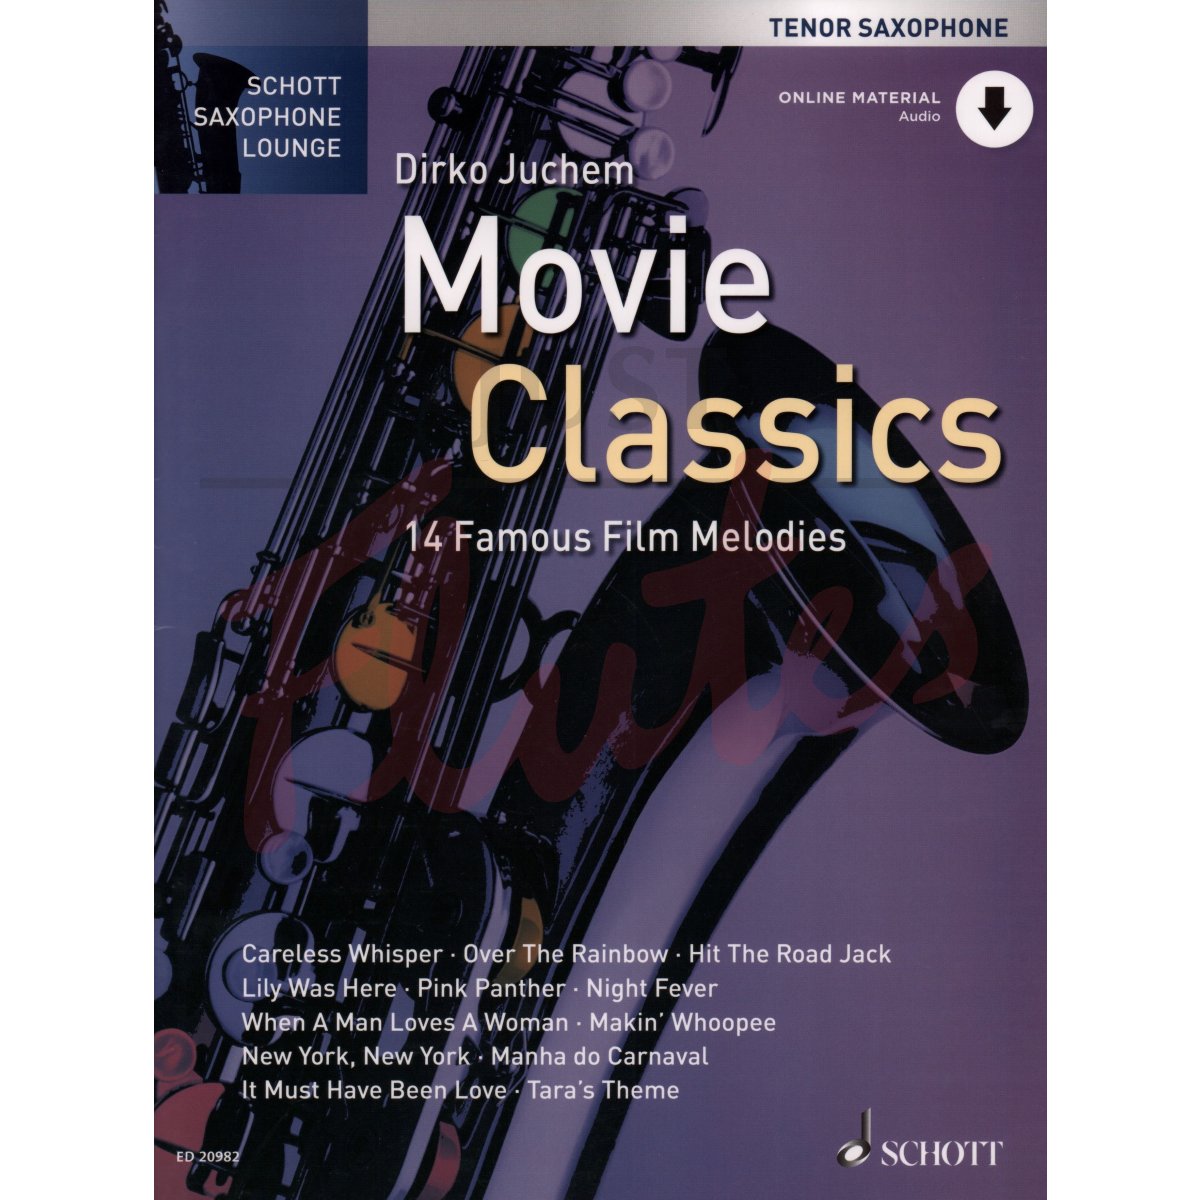 Schott Saxophone Lounge: Movie Classics for Tenor Saxophone and Piano